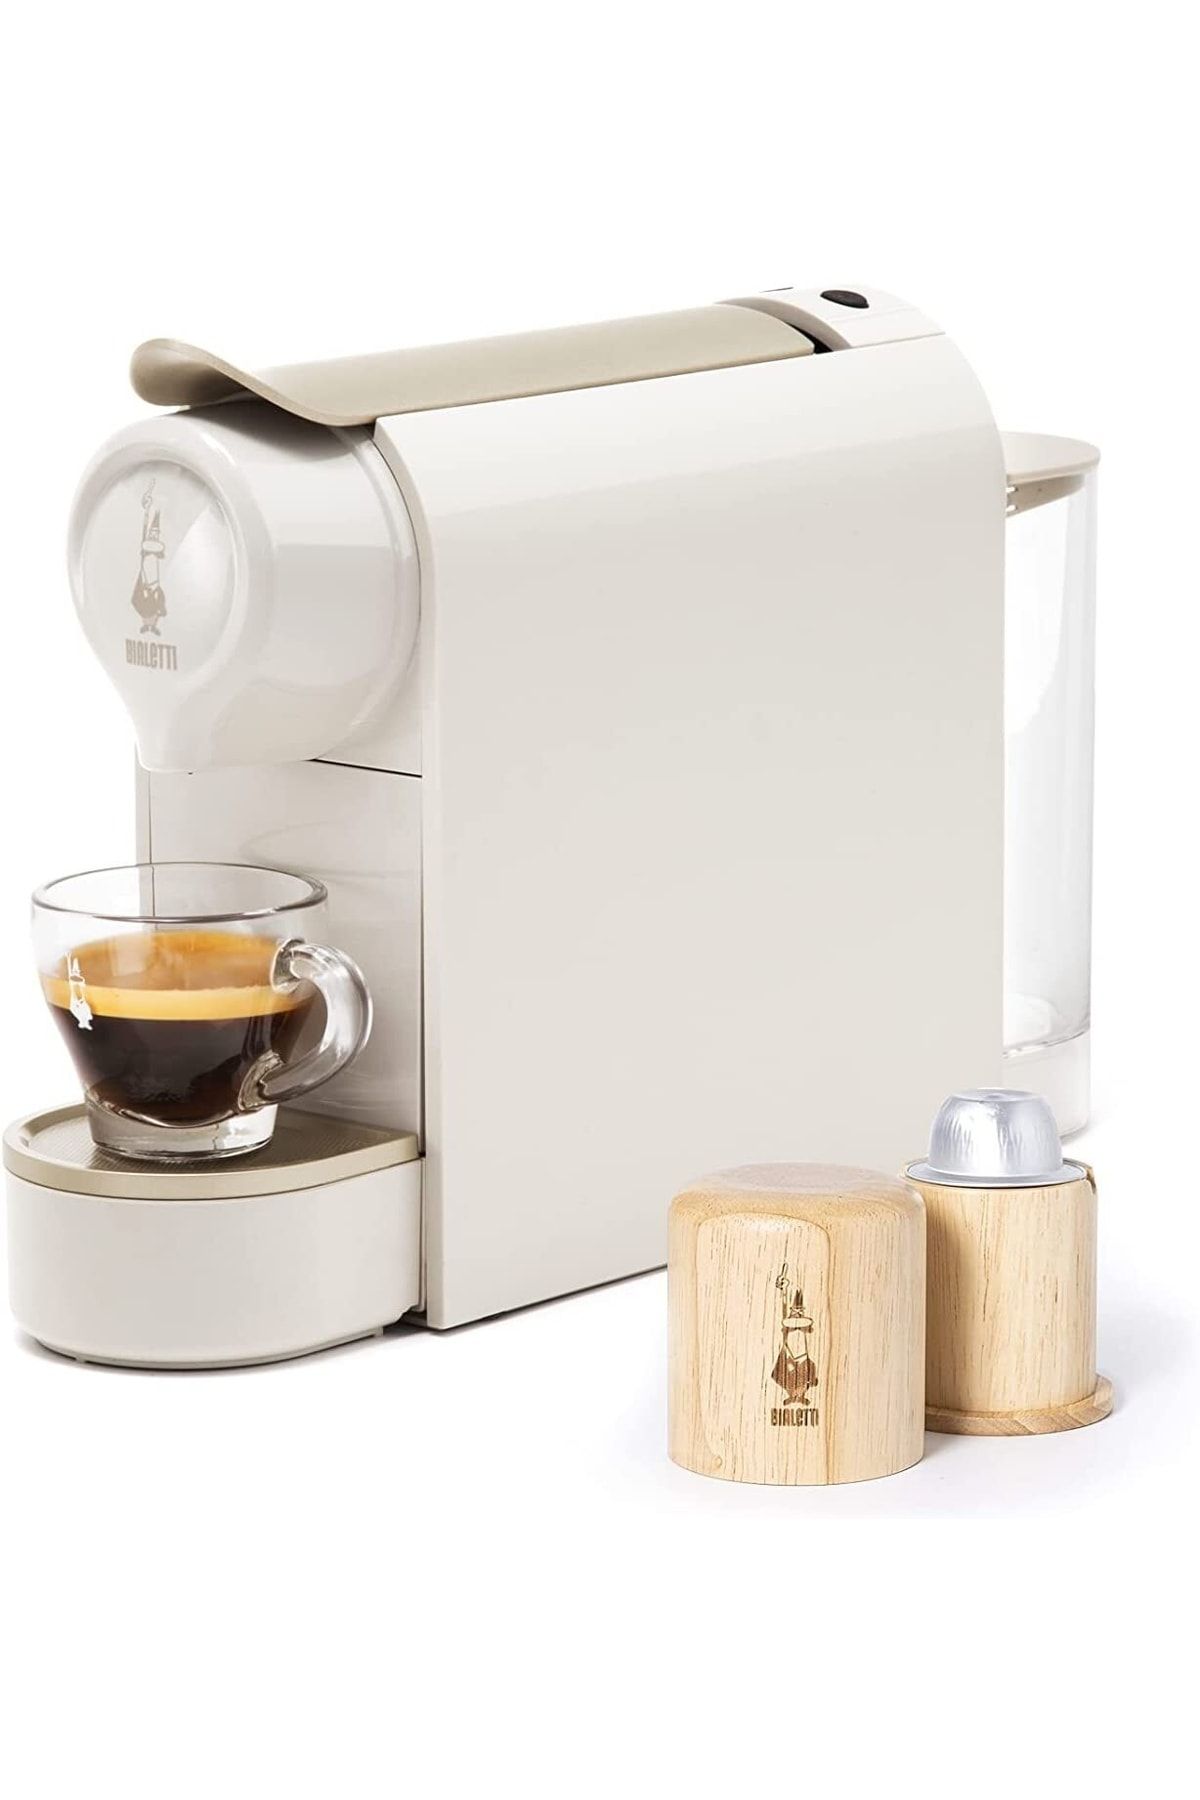 Bialetti Joy Responsible, Alüminyum Kapsüller Için Espresso Kahve Makinesi, Supercompatta, Tank